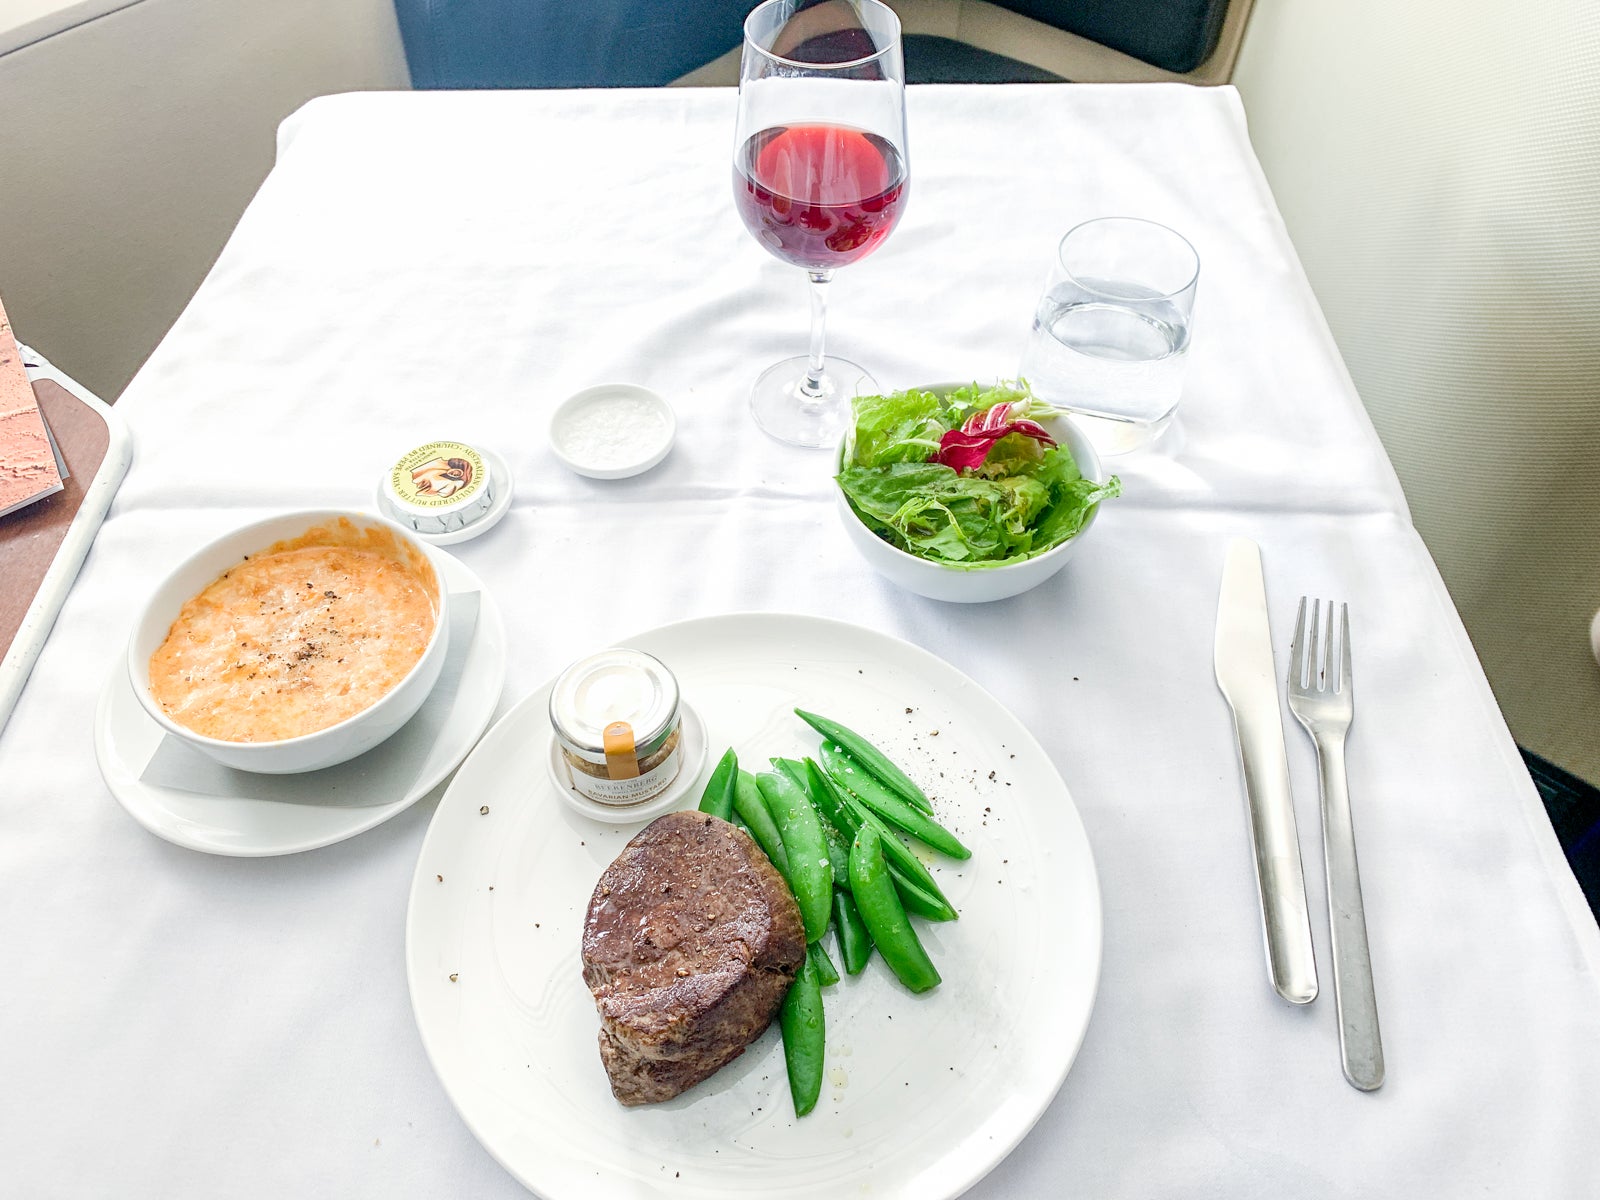 qantas first class meal